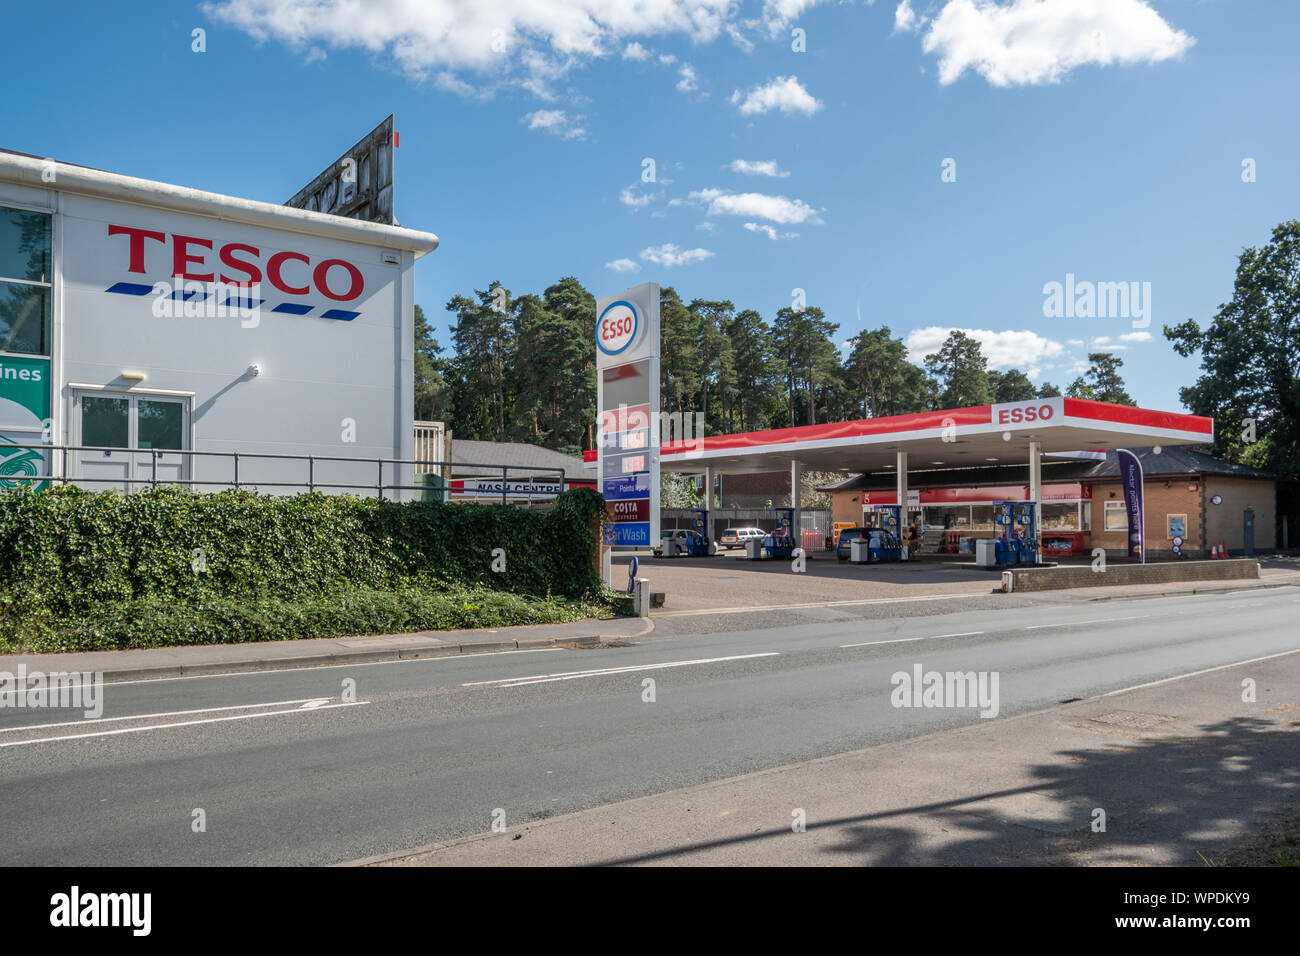 Tesco supermarket and Esso garage or petrol station in Bordon, Hampshire, UK Stock Photo